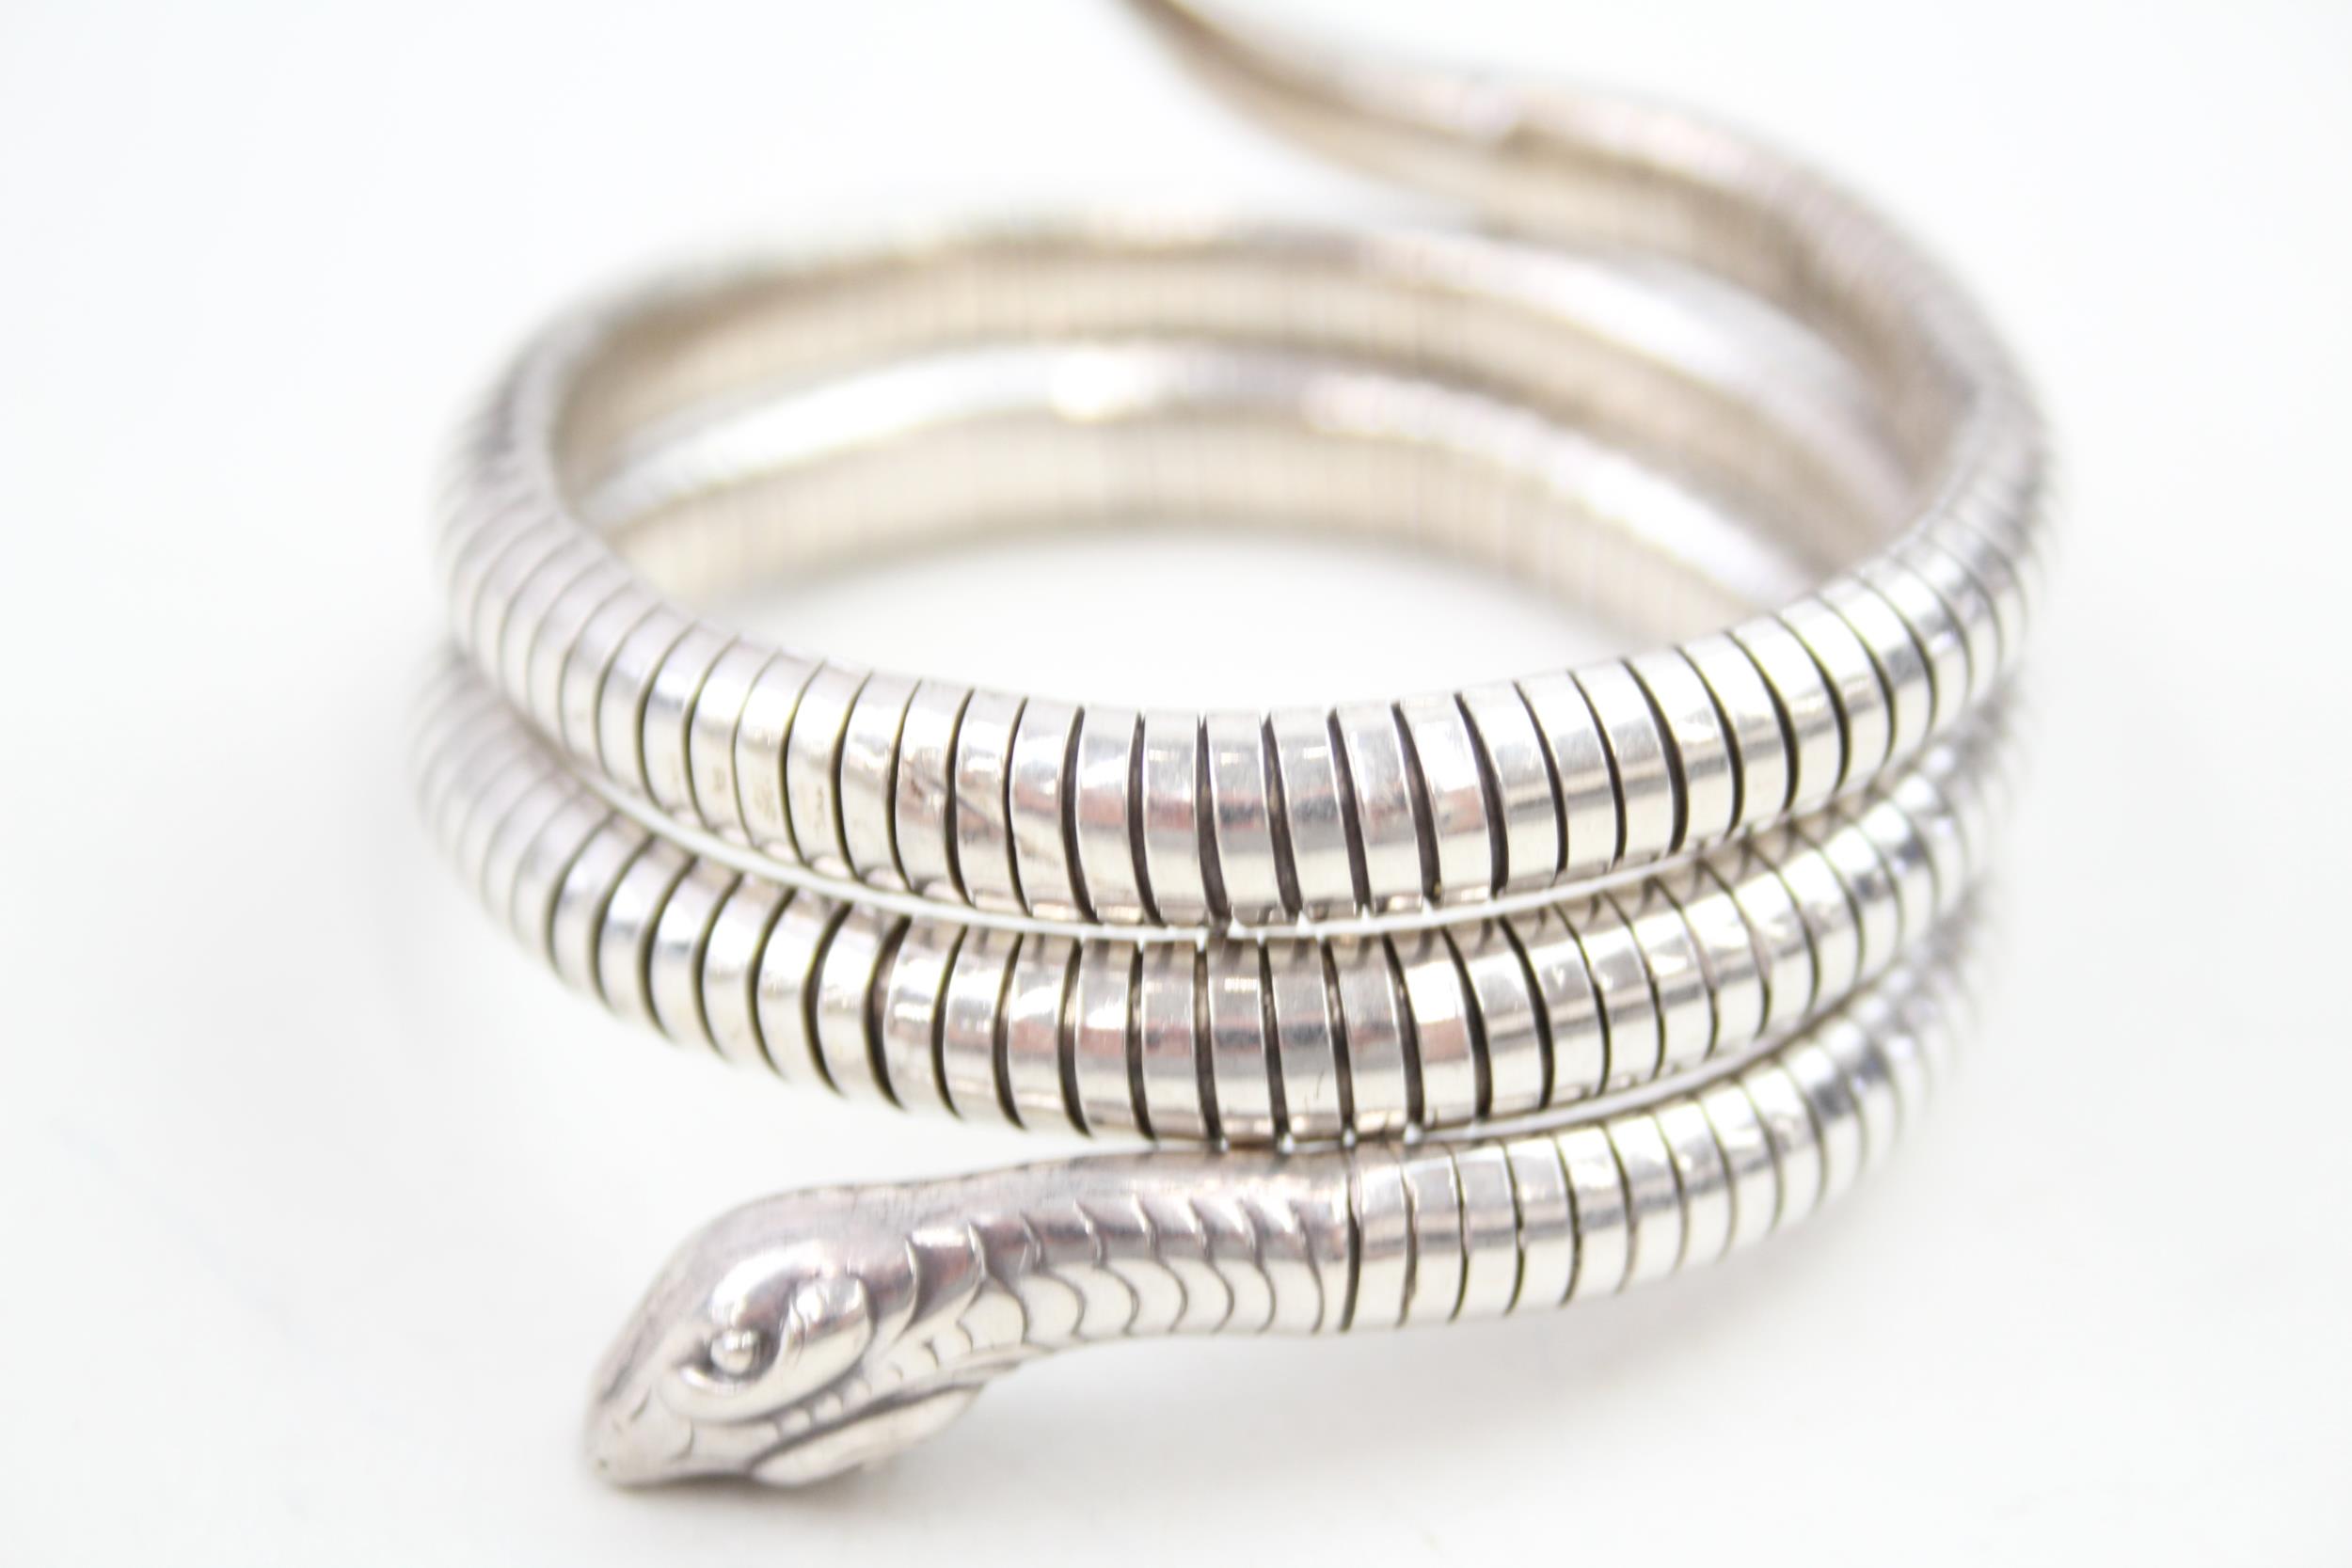 An 835 silver mid century wrap around snake bracelet (43g) - Image 3 of 5